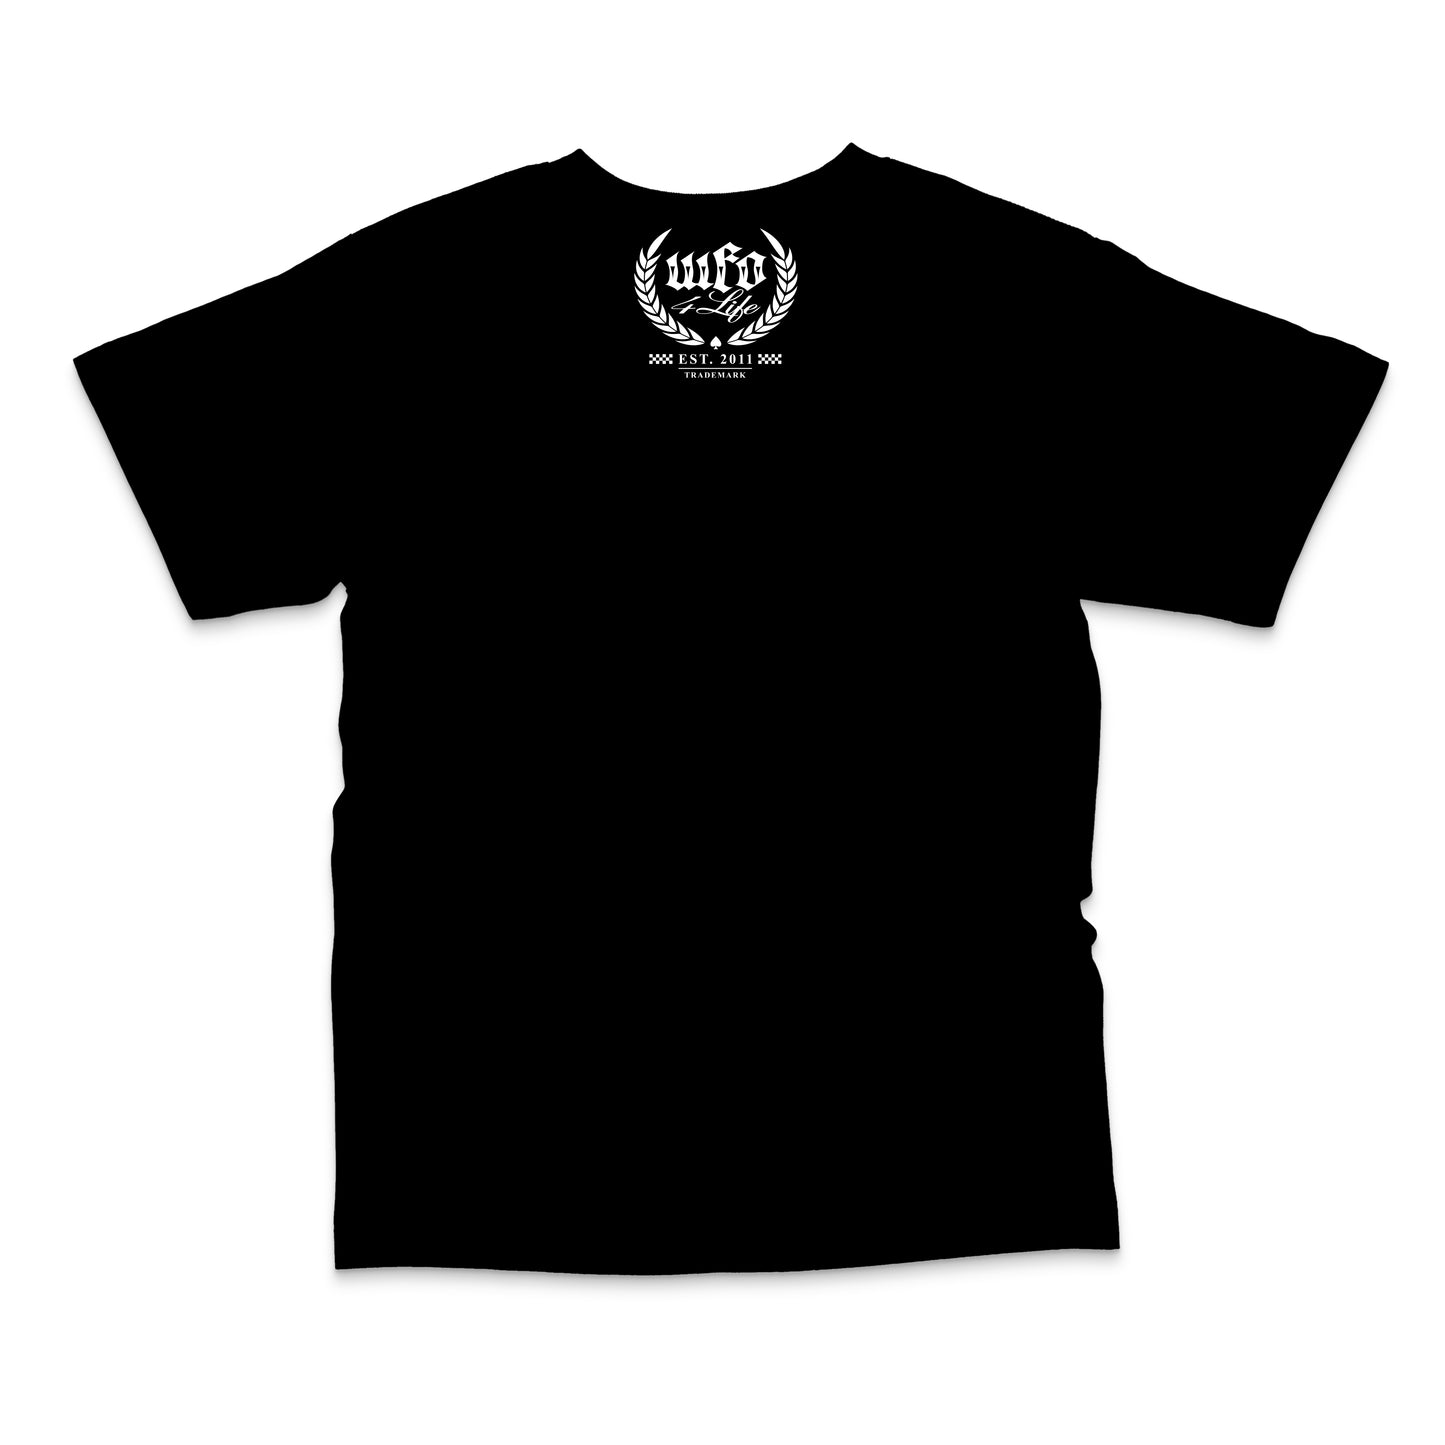 WFO 4 LIFE ™ - "R F O D" T-Shirt - Black